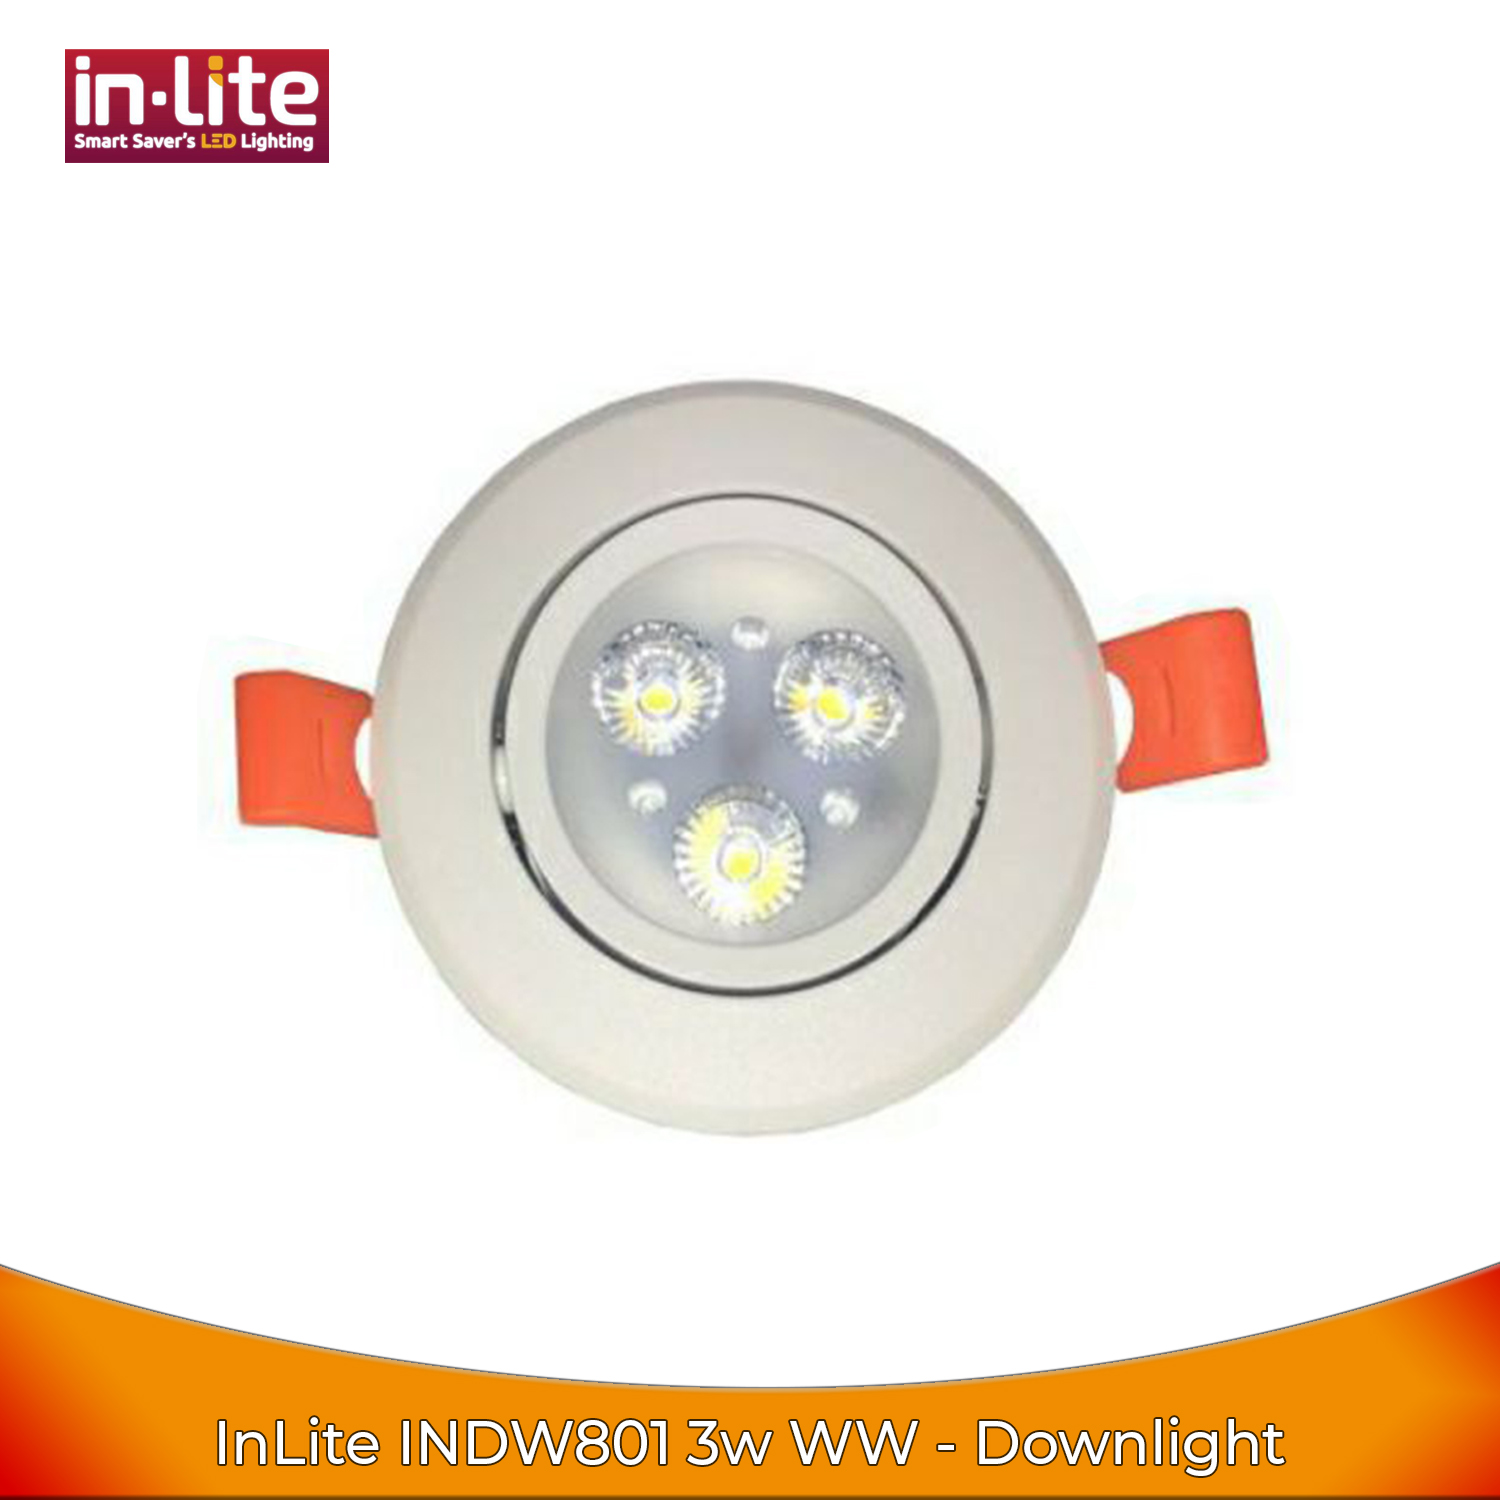 Inlite LED Downlight INDW801 3W WW - Kuning